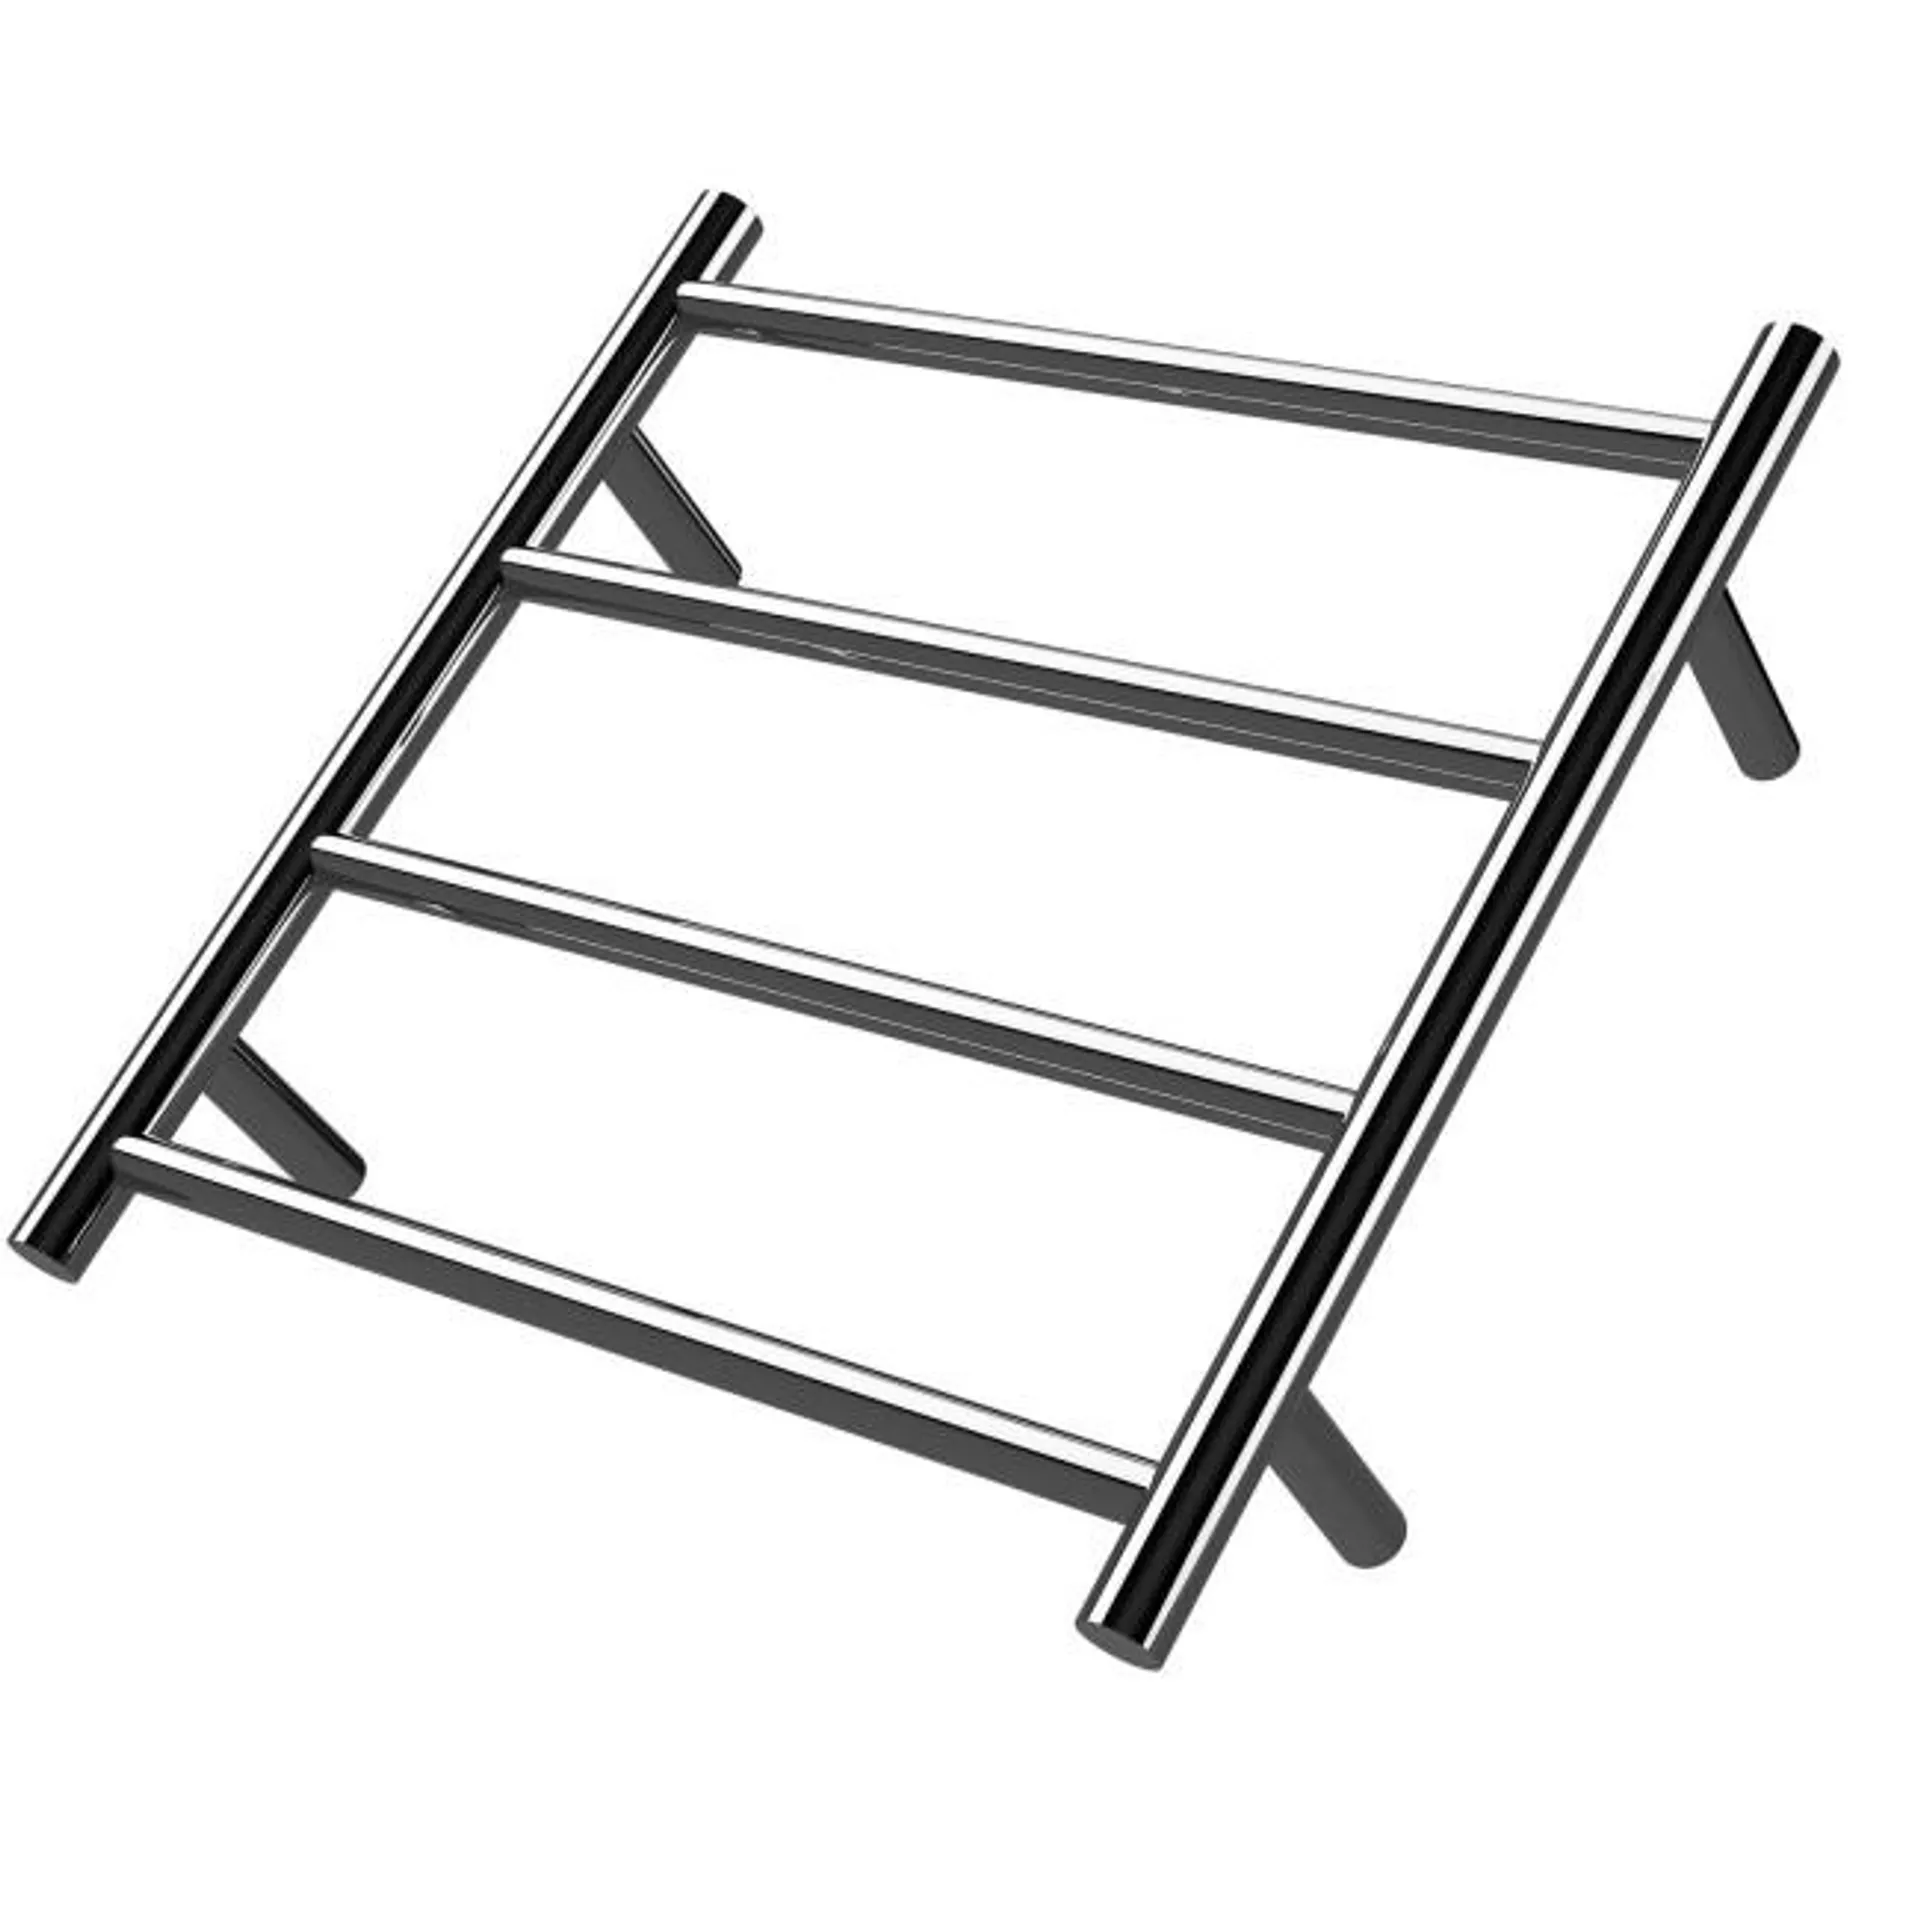 4 Bar Heated Ladder Towel Rail - Anise